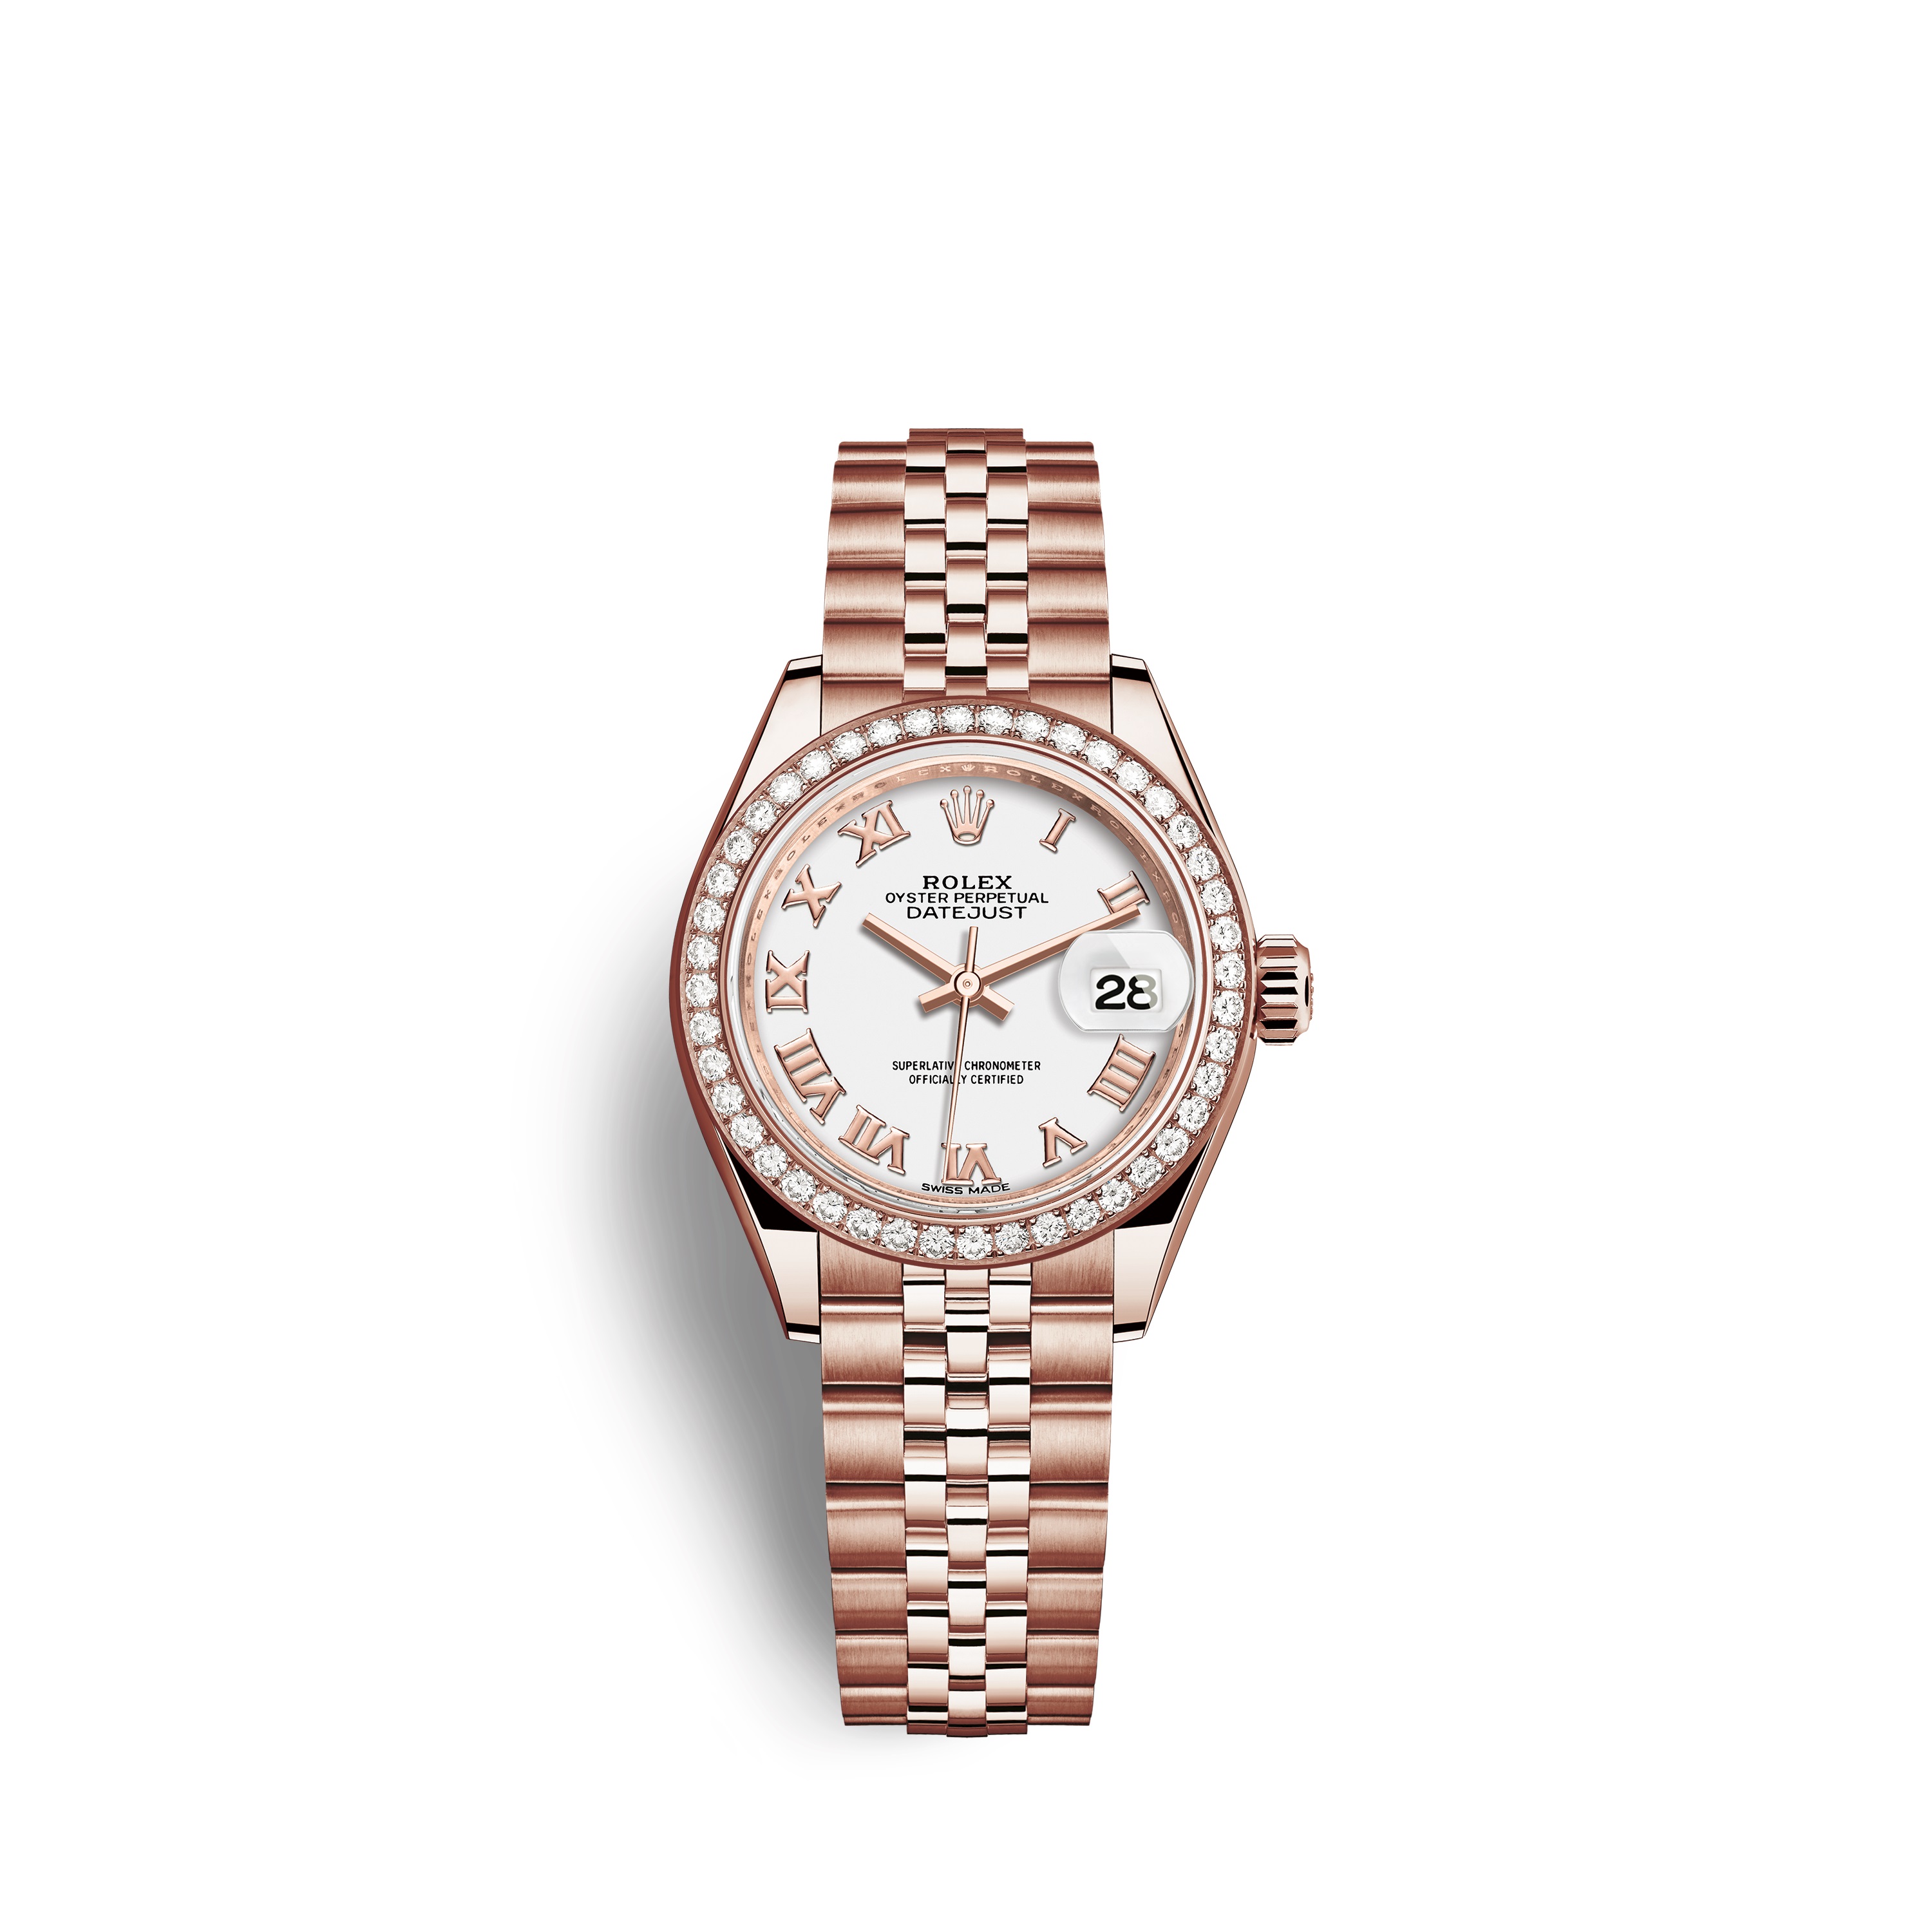 Lady-Datejust 28 279135RBR Rose Gold & Diamonds Watch (White)